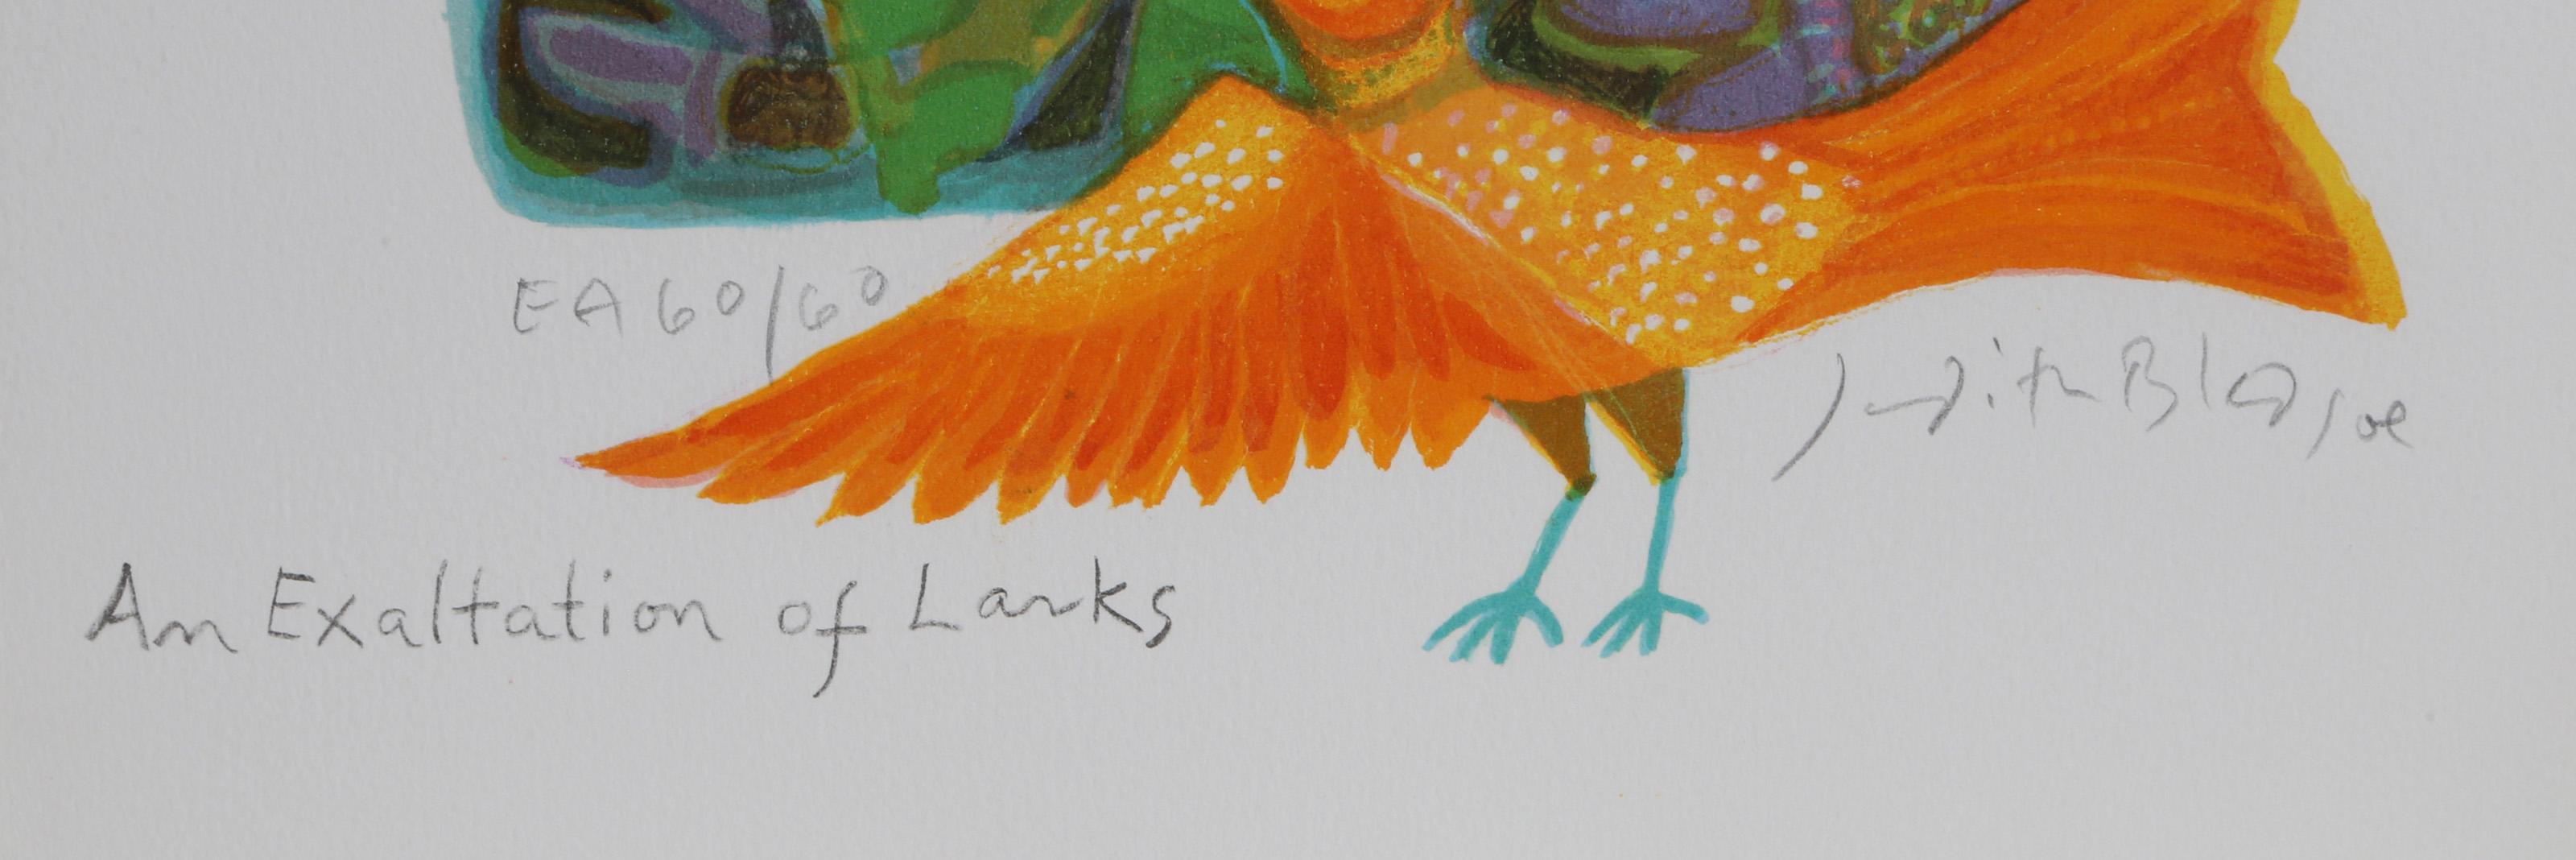 An Exultation of Larks, Lithograph by Judith Bledsoe For Sale 1